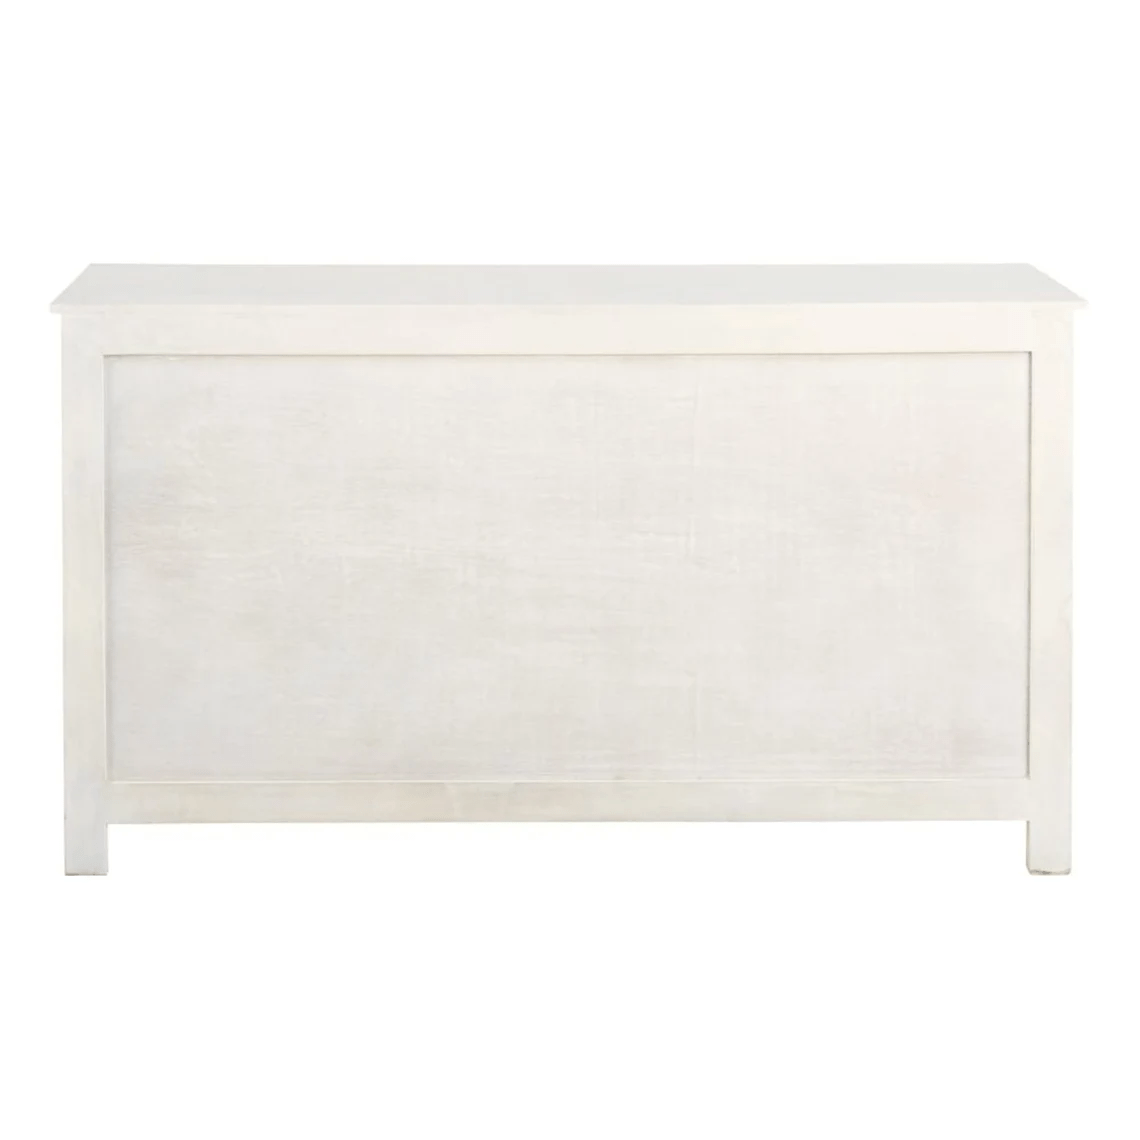 Handmade white color sideboard